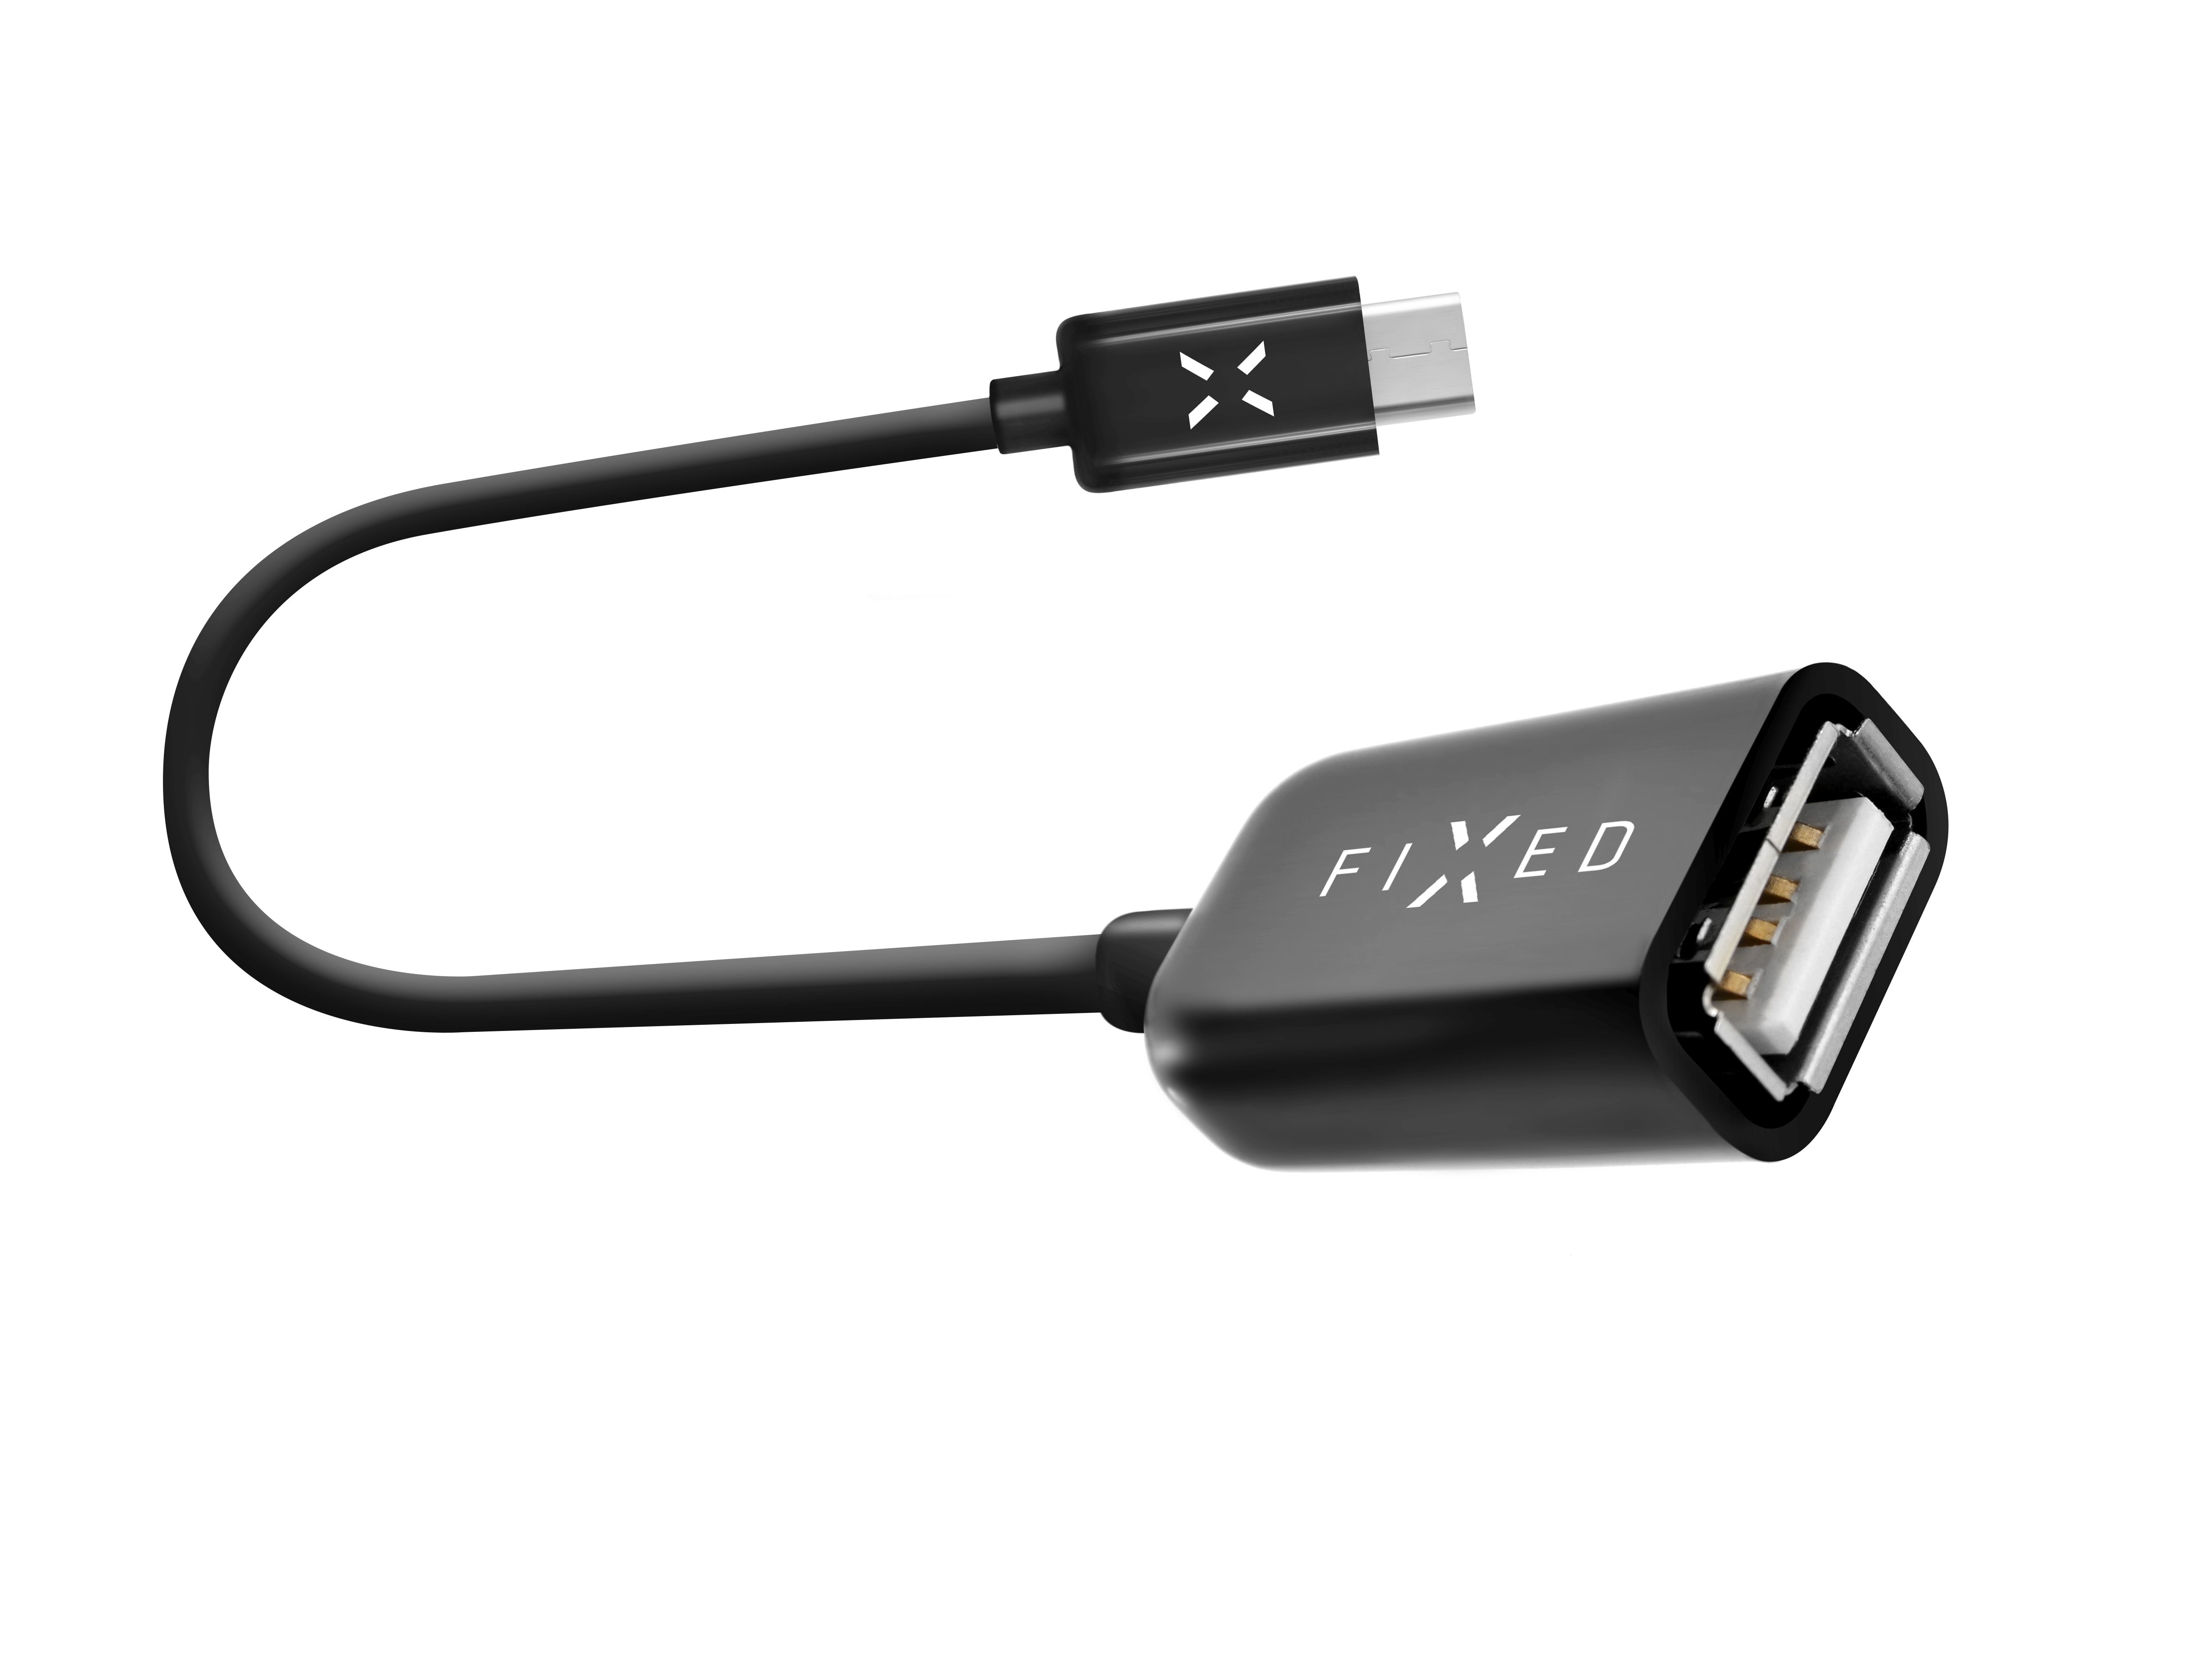 OTG datový kabel FIXED s konektory USB-C/USB-A, USB 2.0, 20 cm, černý